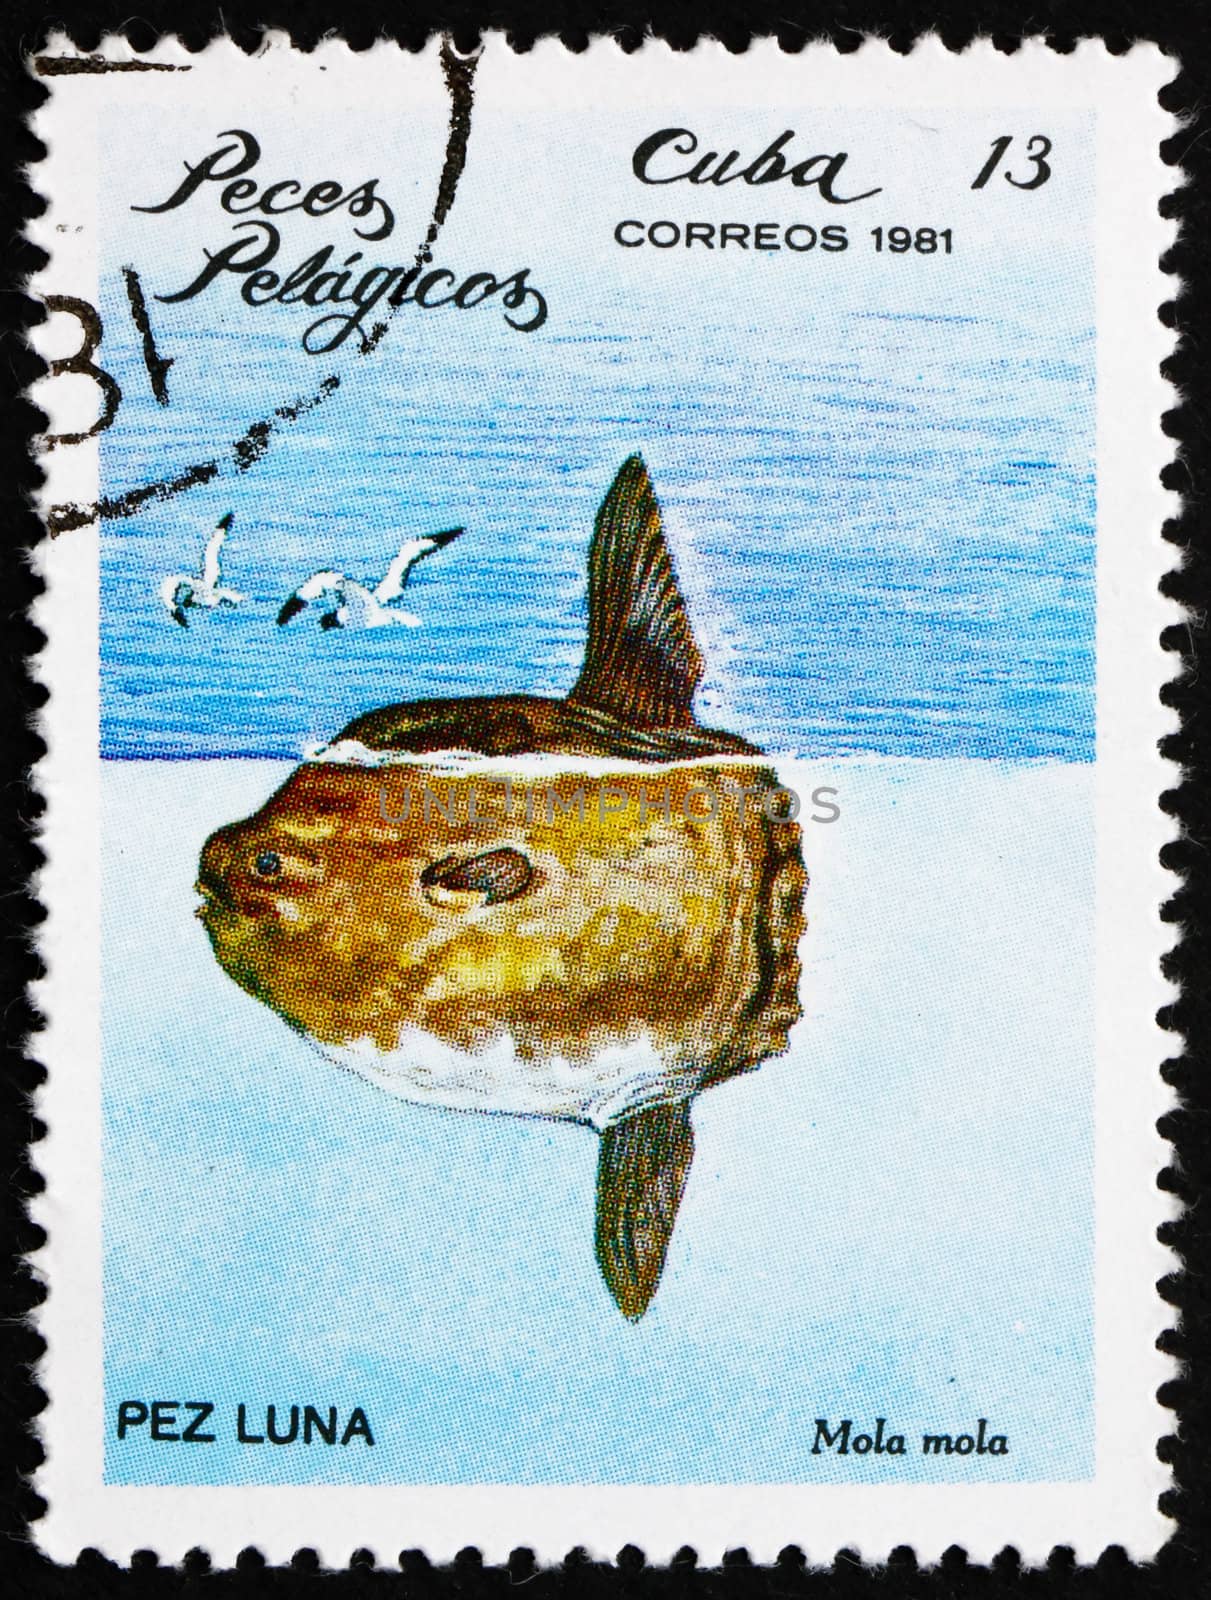 CUBA - CIRCA 1981: a stamp printed in the Cuba shows Ocean Sunfish, Mola Mola, Pelagic Fish, circa 1981